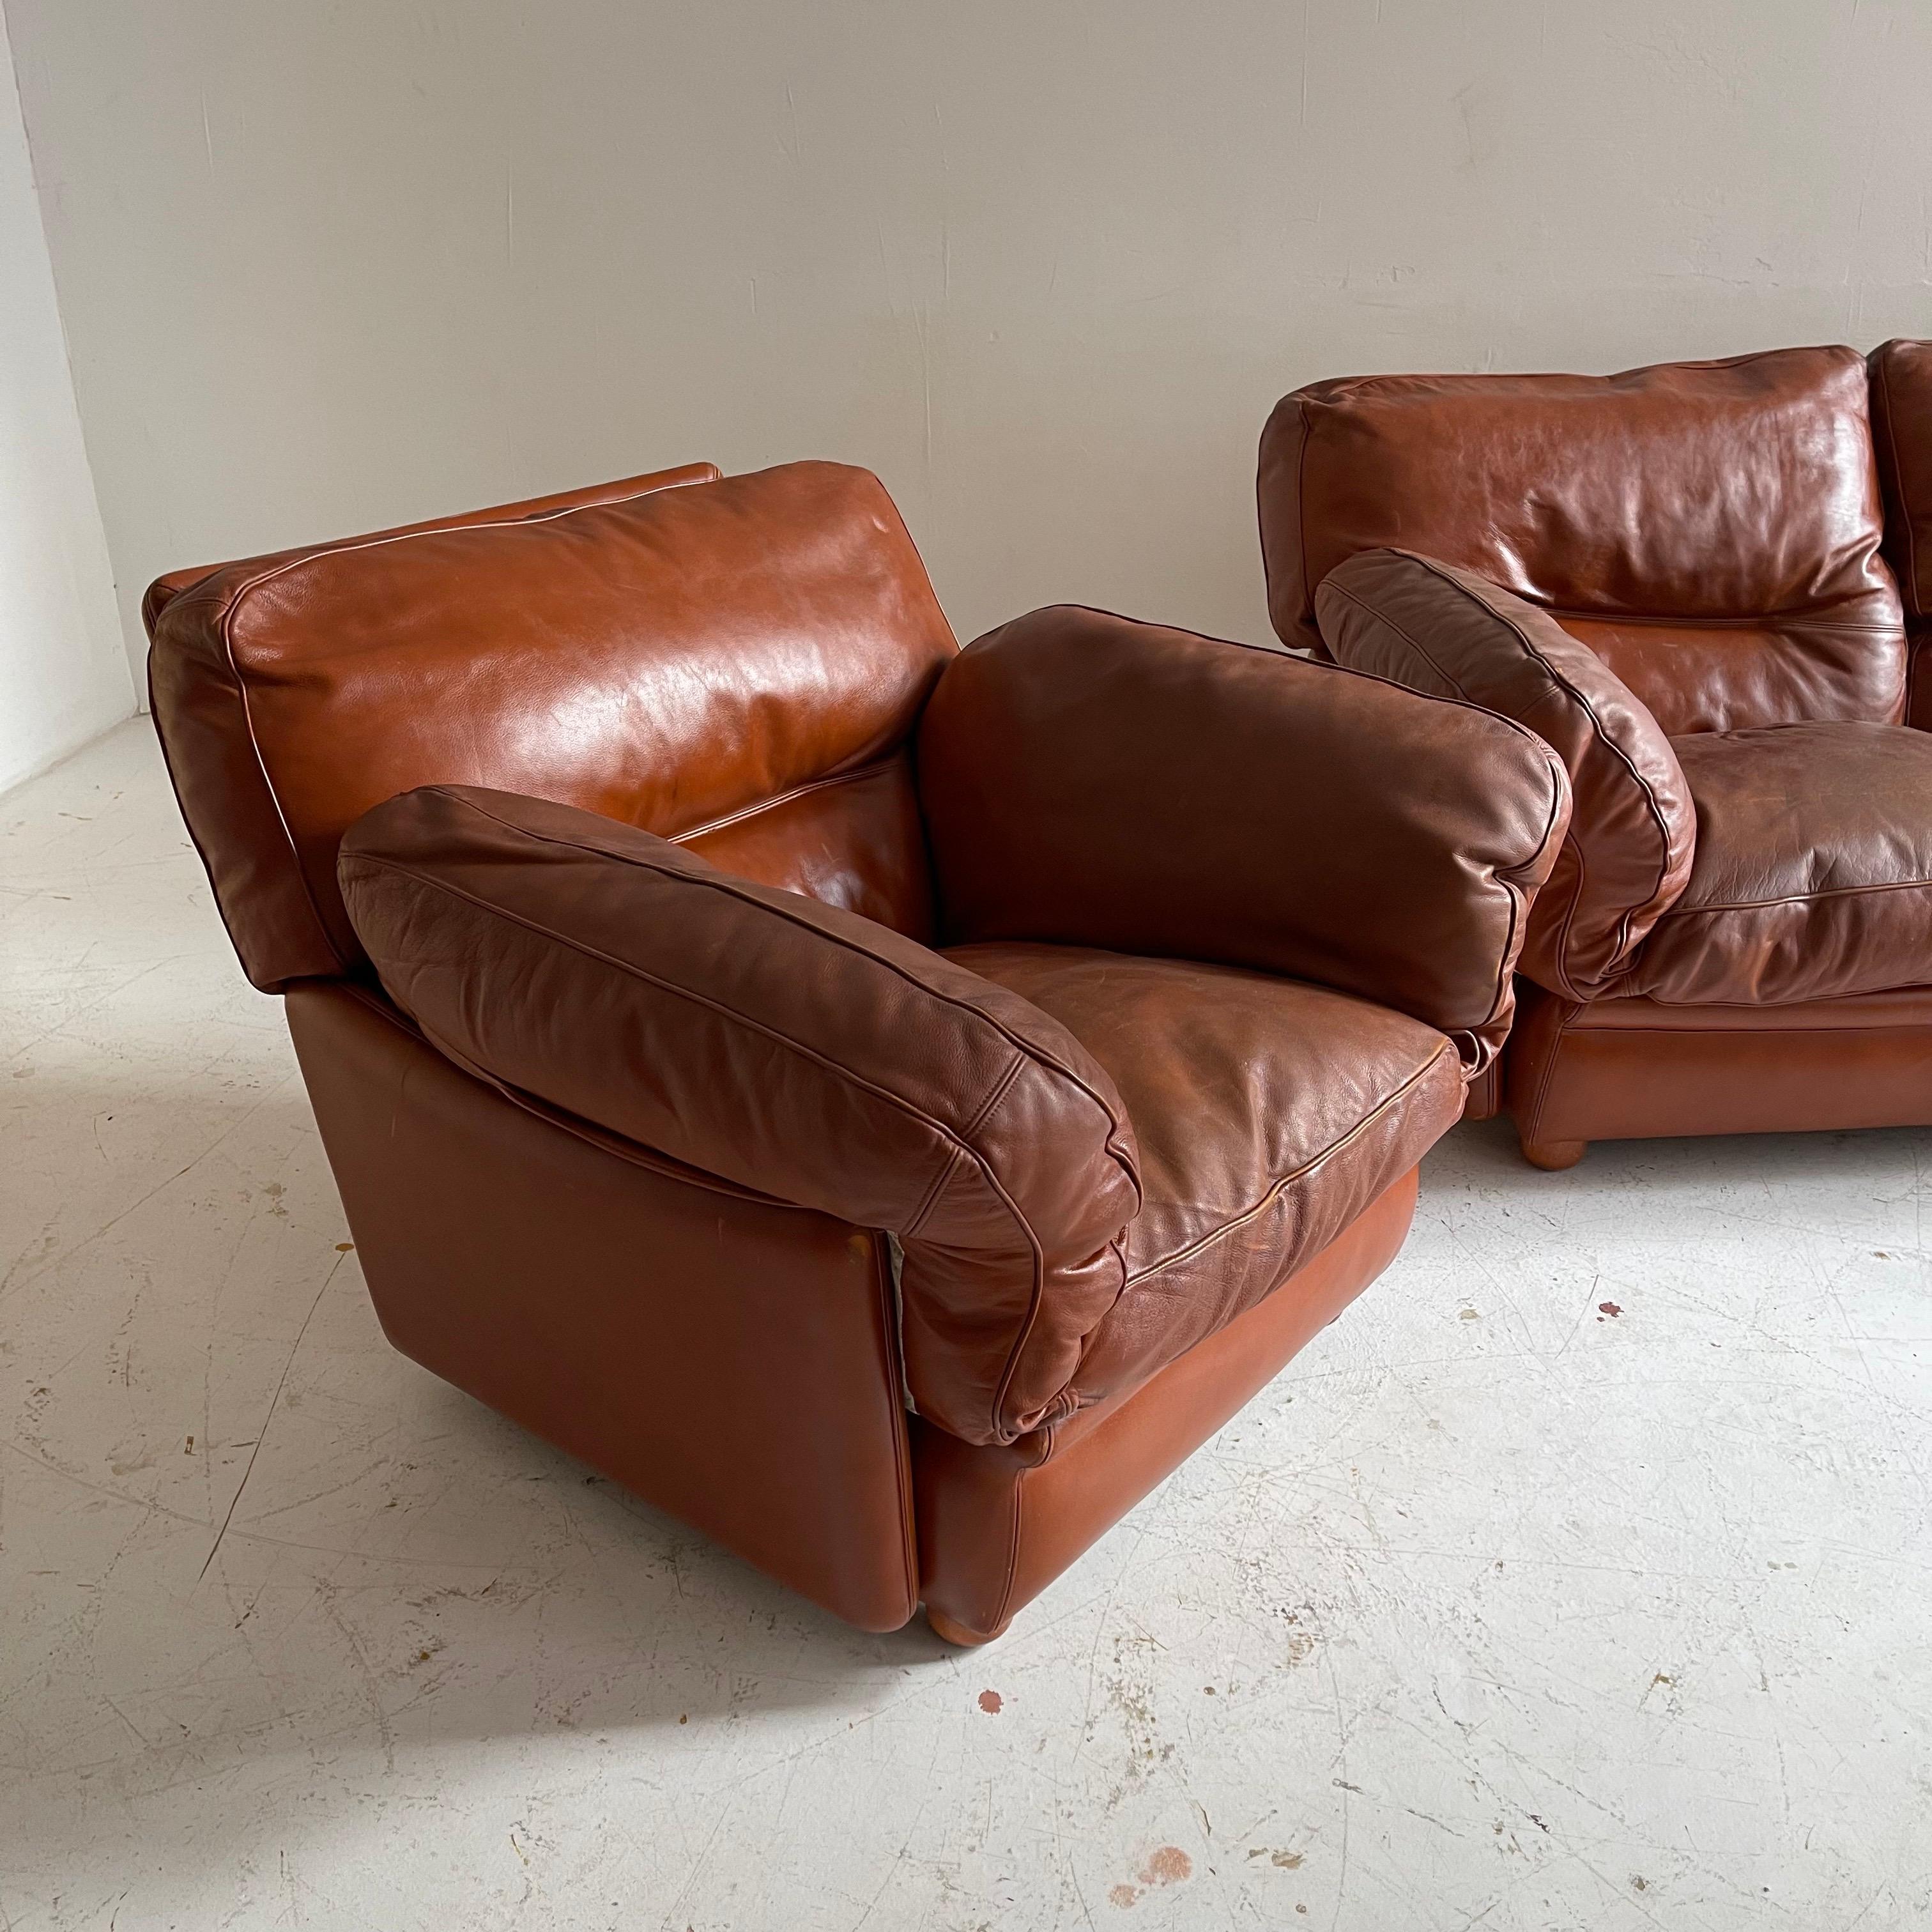 Tito Agnoli Cognac leather sofa suite Model 'Poppy' Paltrona Frau, Italy 1970s. Patinated burnt orange leather

Armchair: 90cm x 100cm x 80cm - Seat height 50cm.